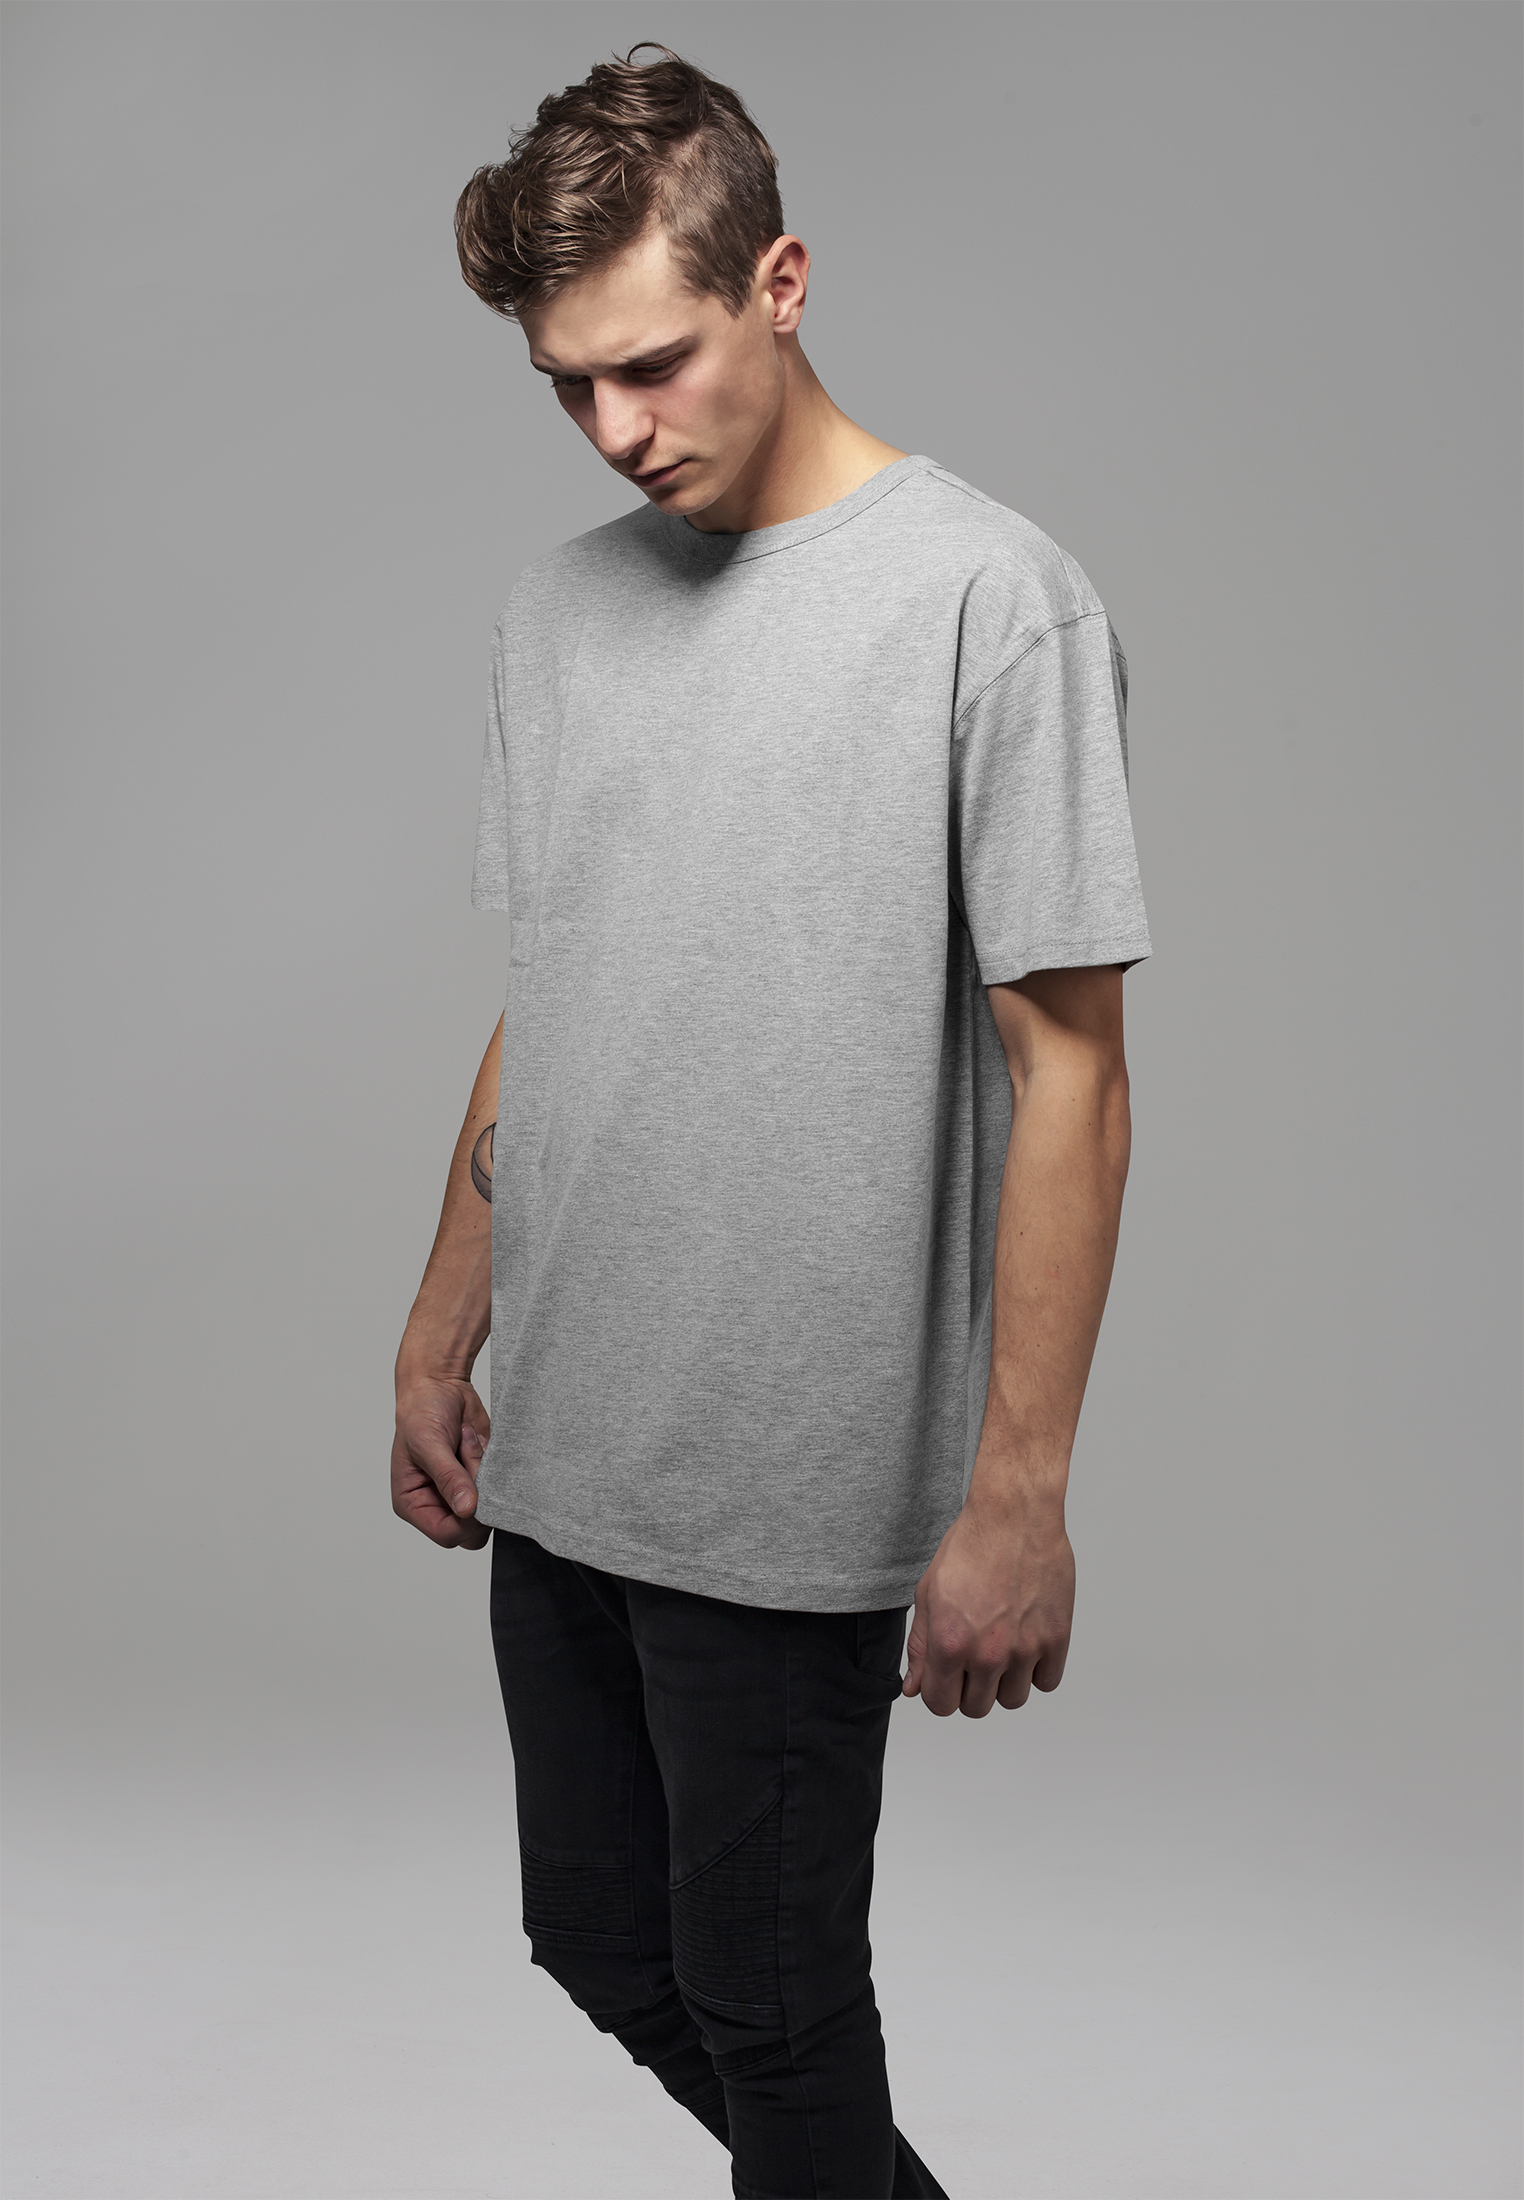 Urban Classics Oversized Shirt Herren Big Fit T-Shirt extra groß oversize S  M L | eBay